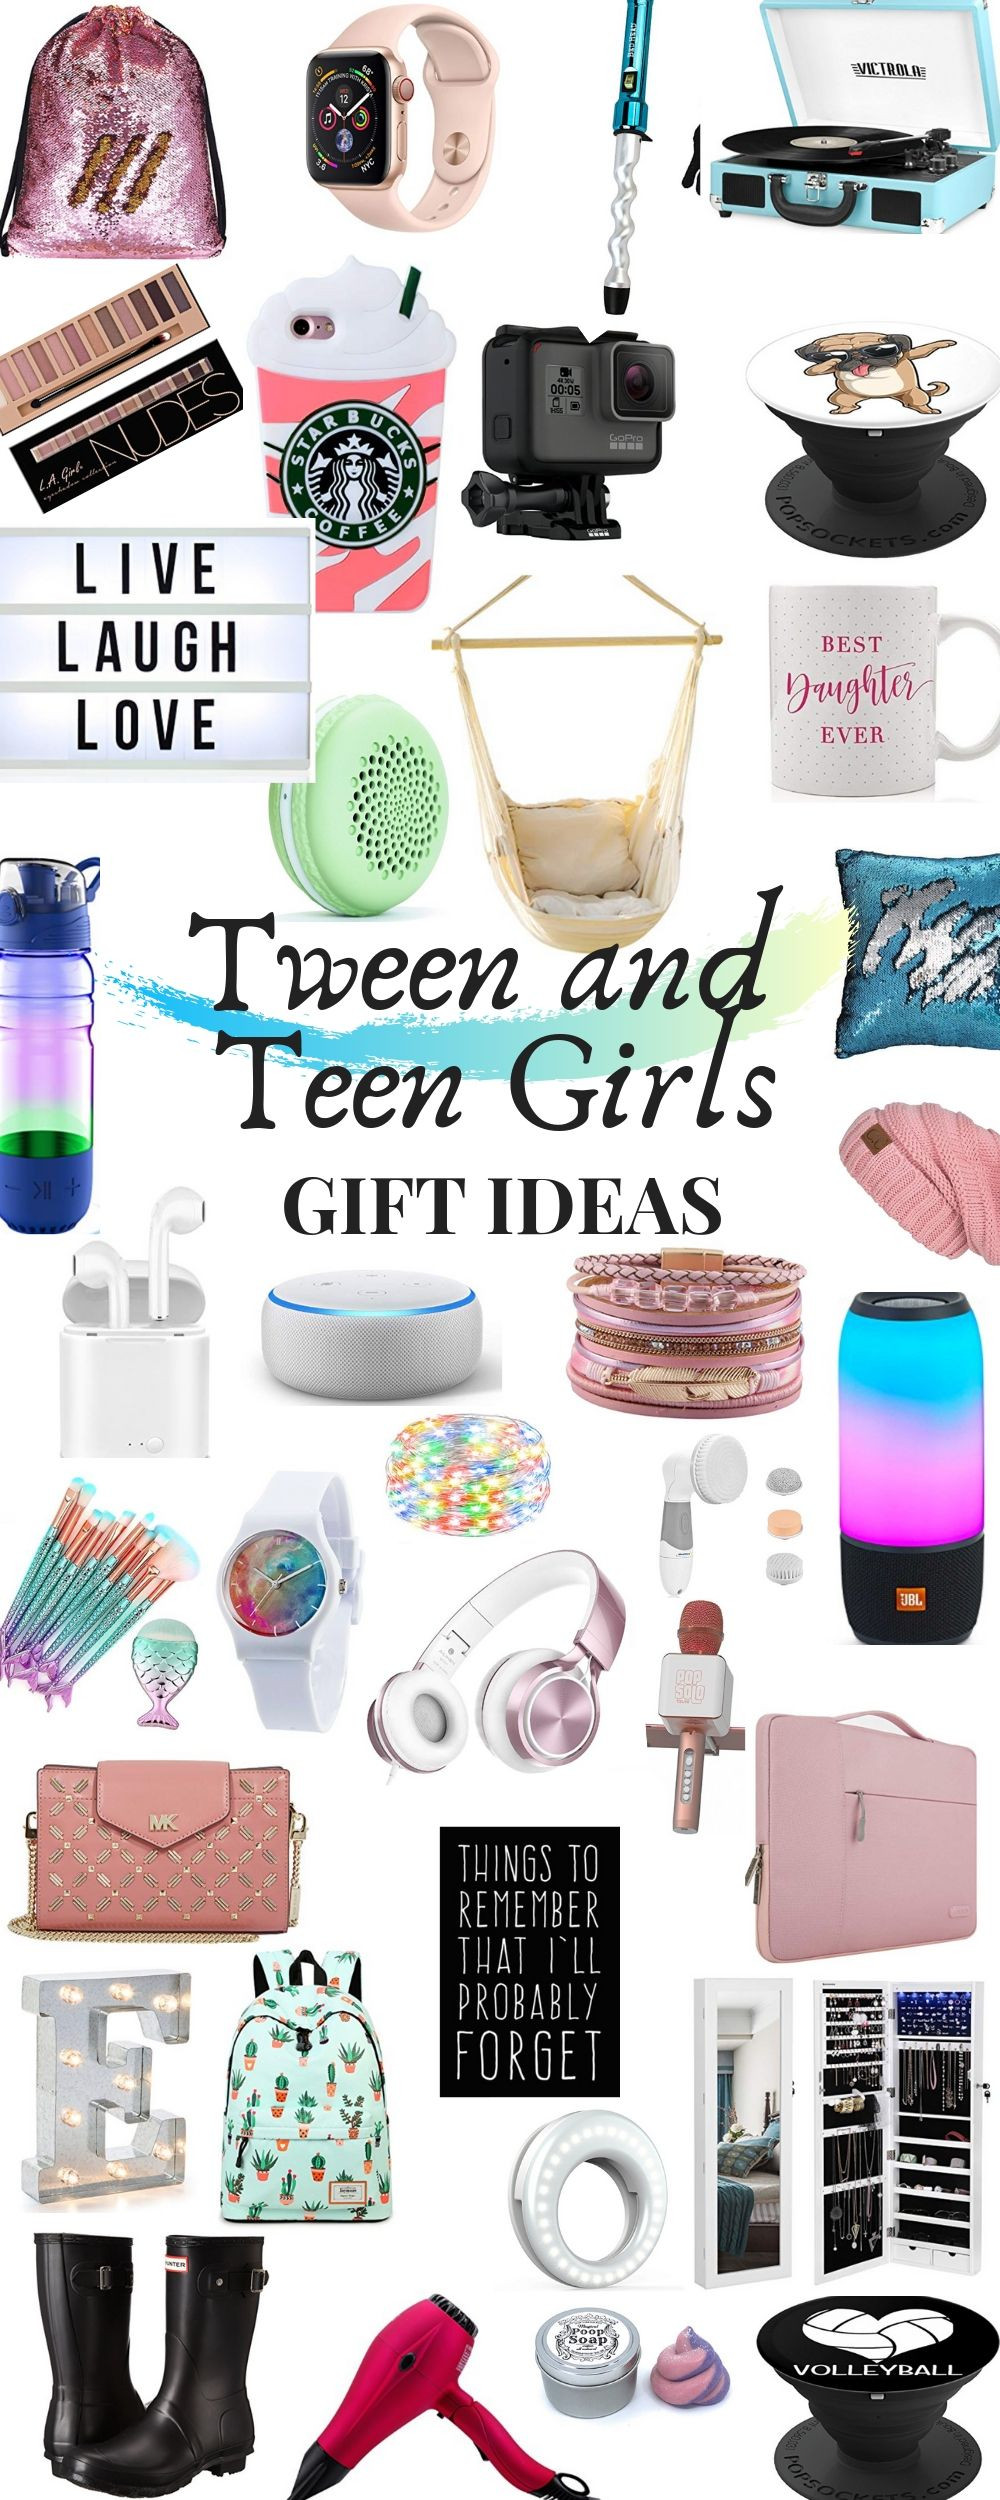 Ideas Gift For Girlfriend
 Teenage Girl and Tween Girl Gift Guide 2019